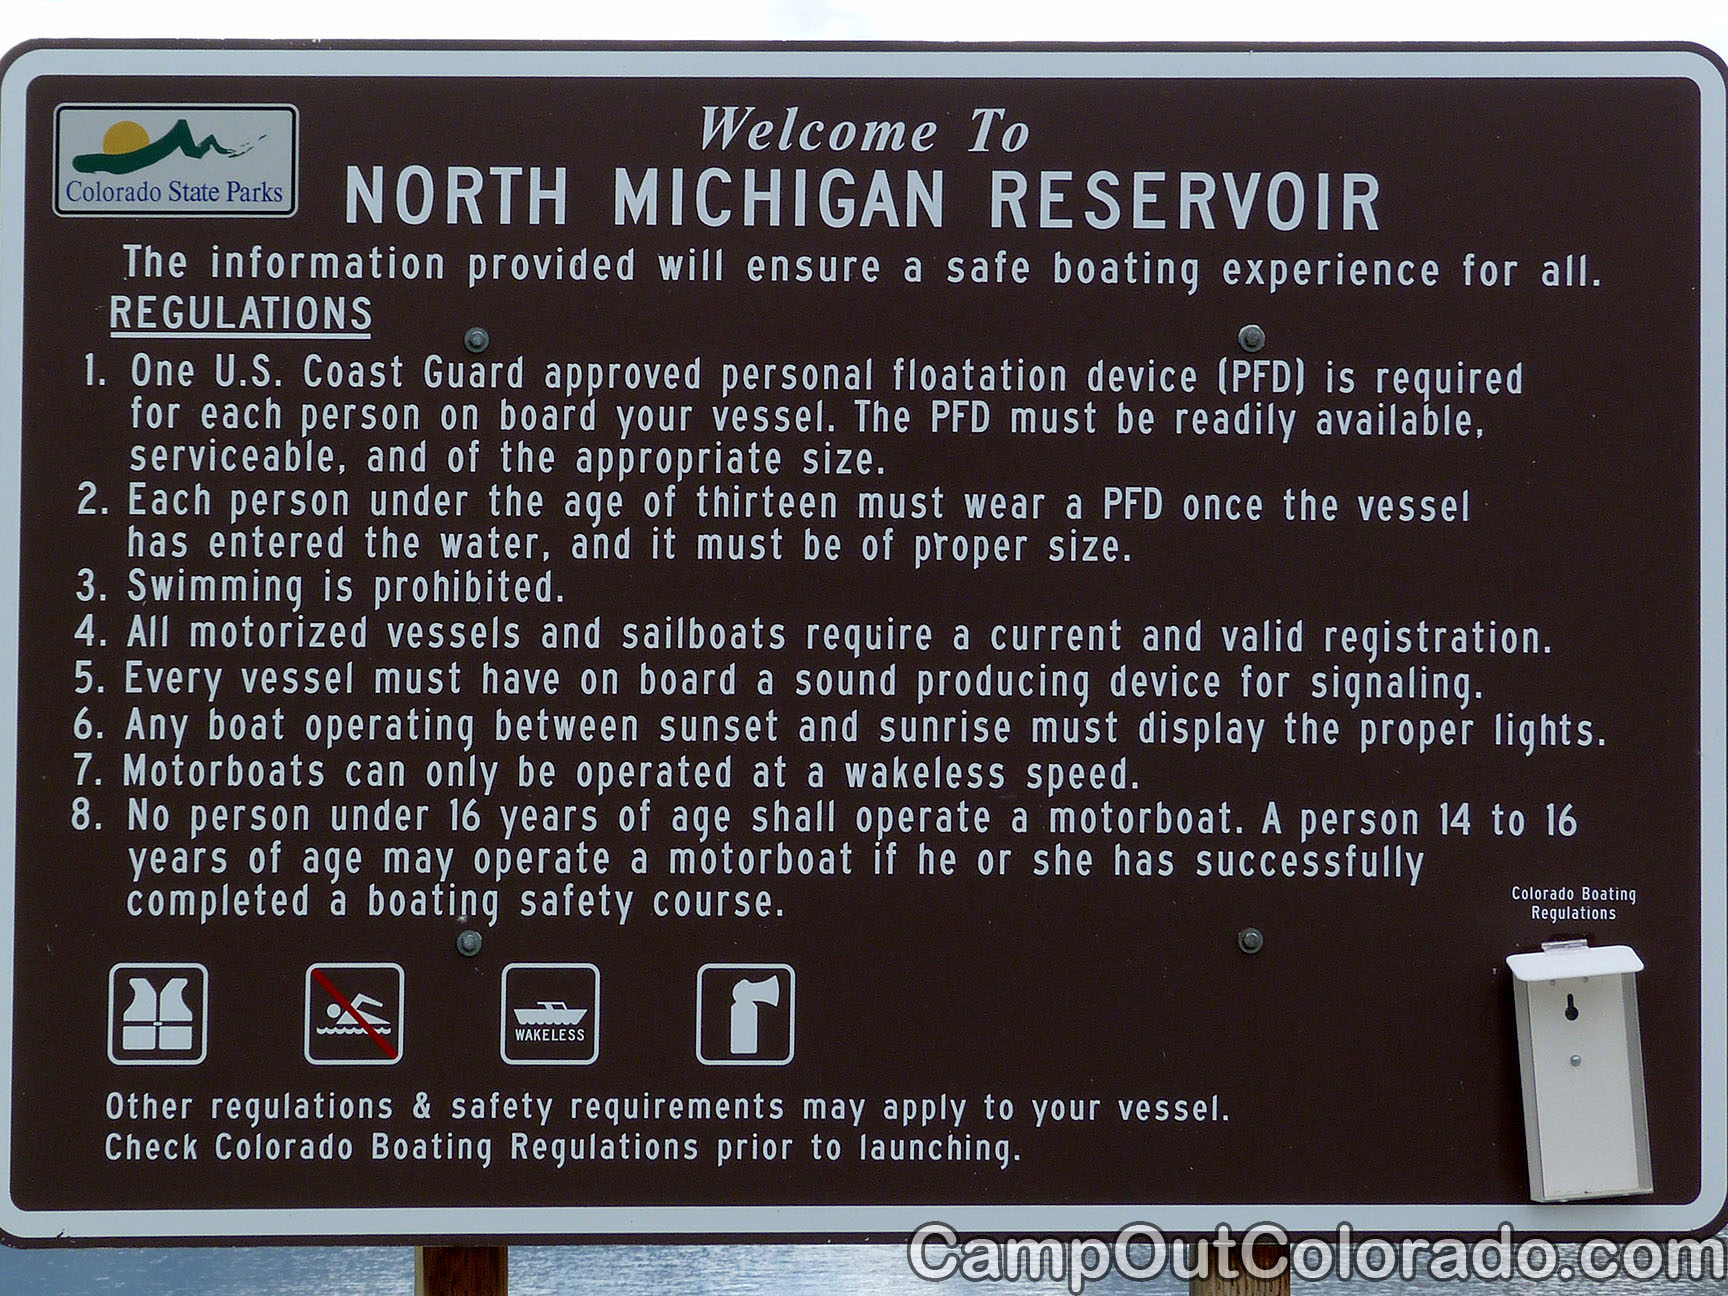 Campoutcolorado-north-michigan-reservoir-campground-kiosk